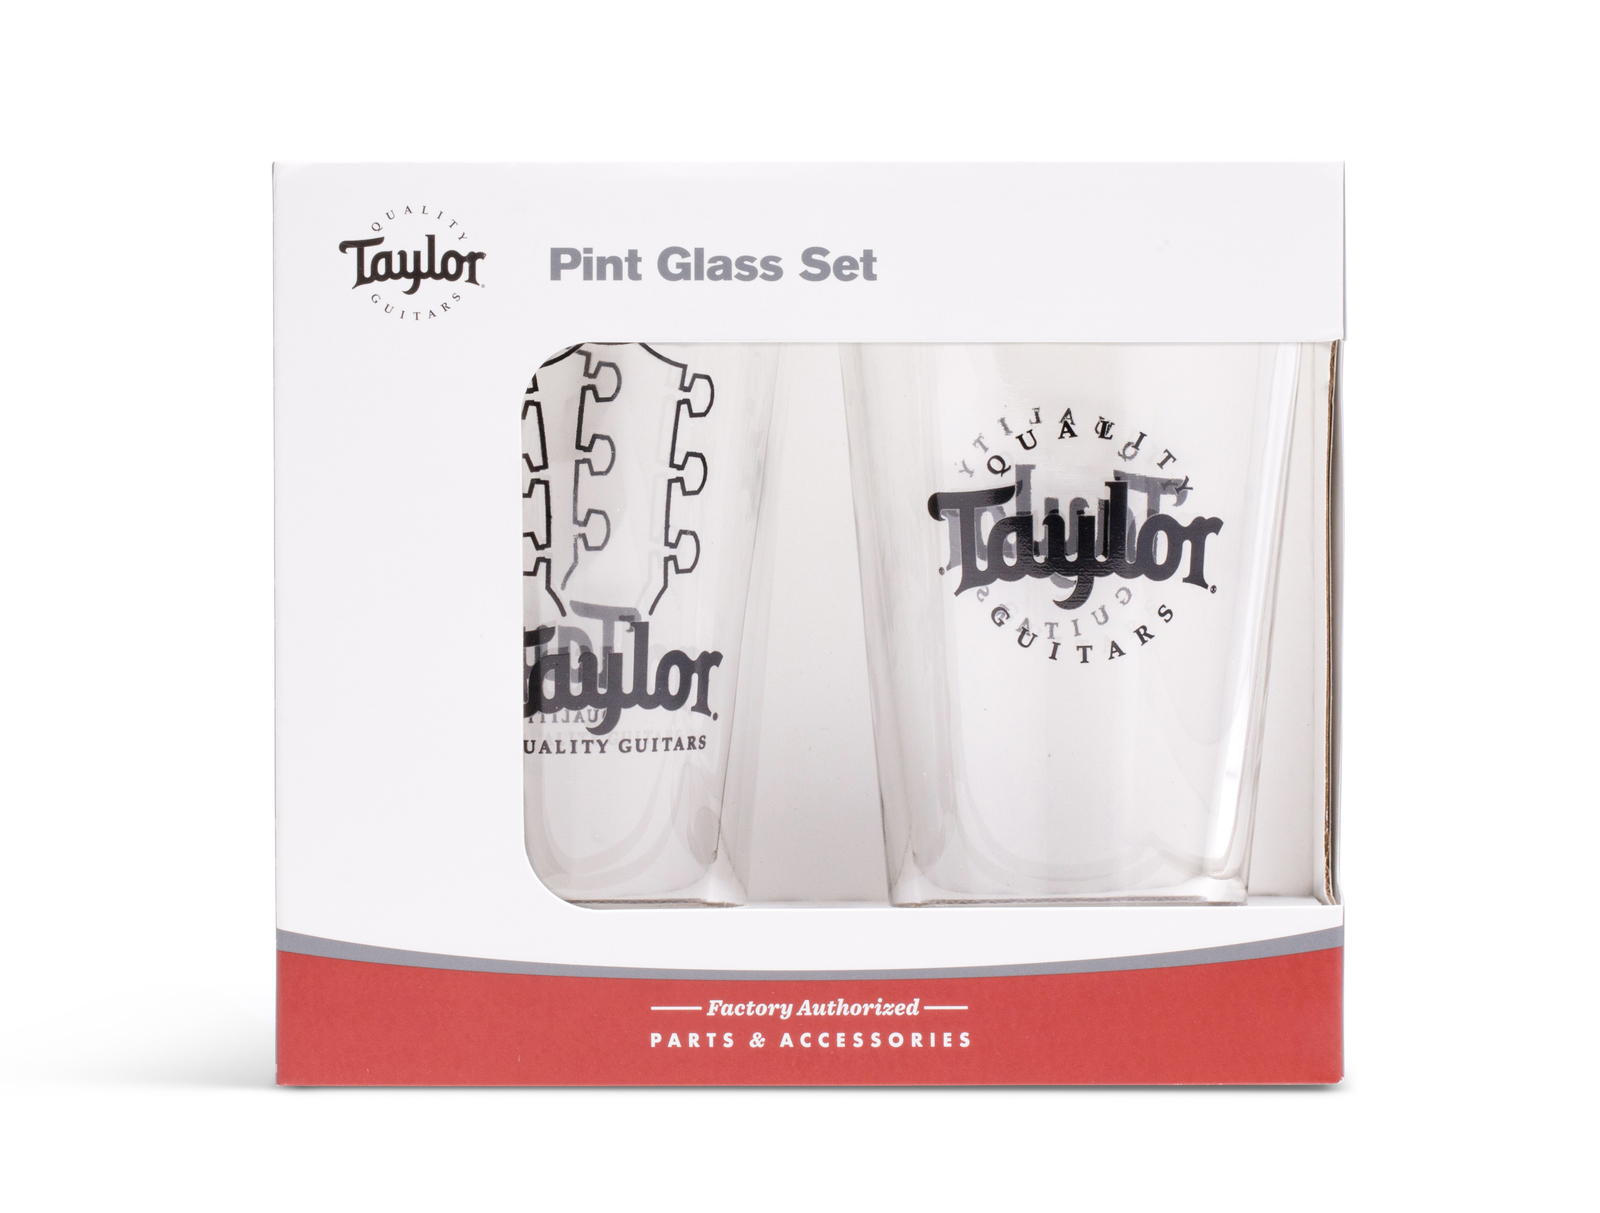 Taylor 1524 16oz Pint Glass Set (Pair)